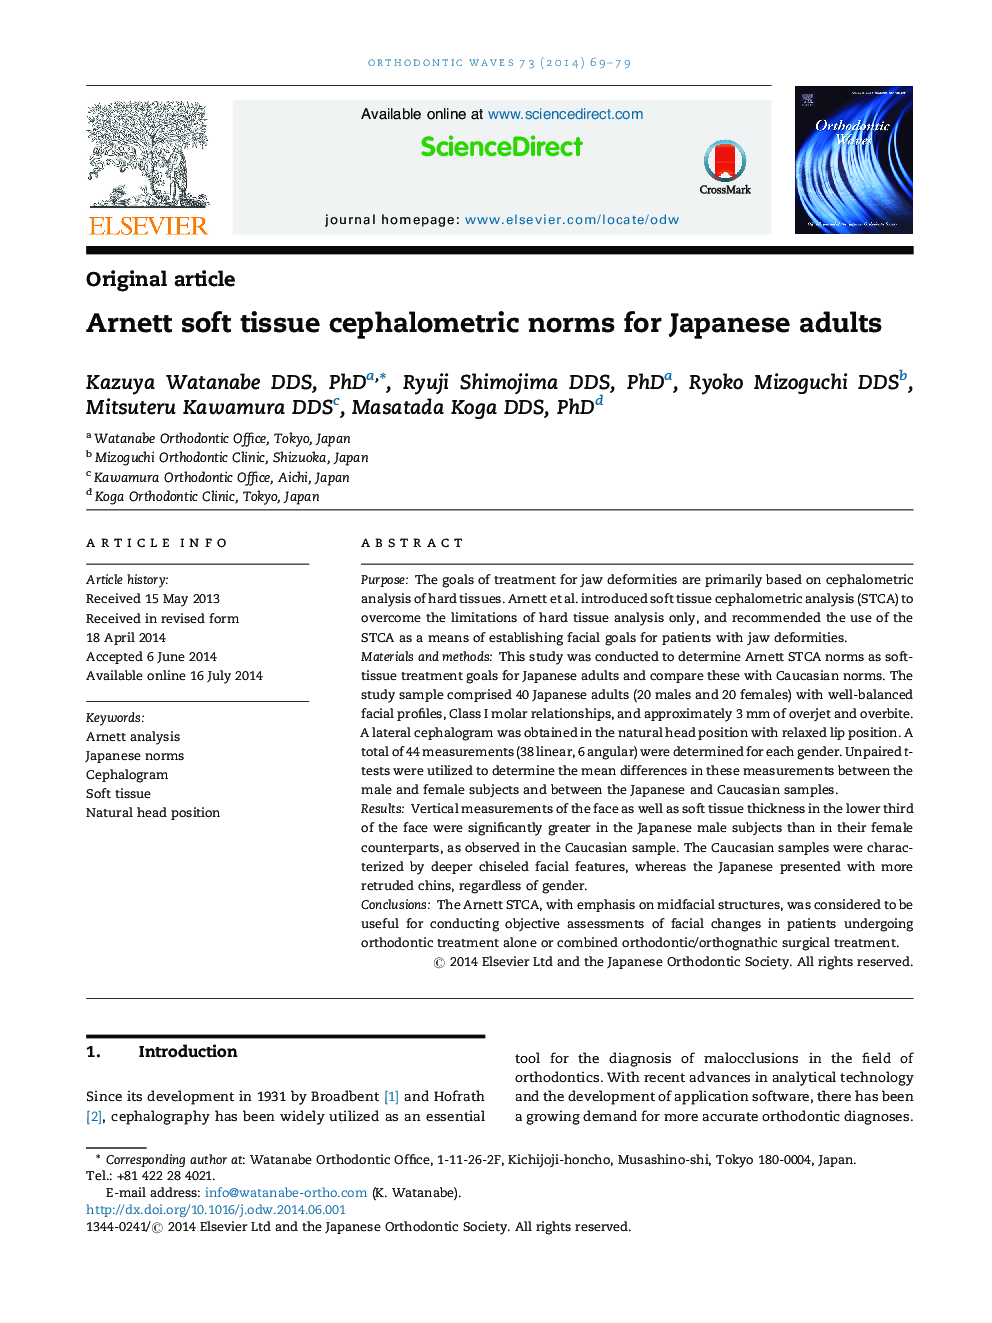 Arnett soft tissue cephalometric norms for Japanese adults